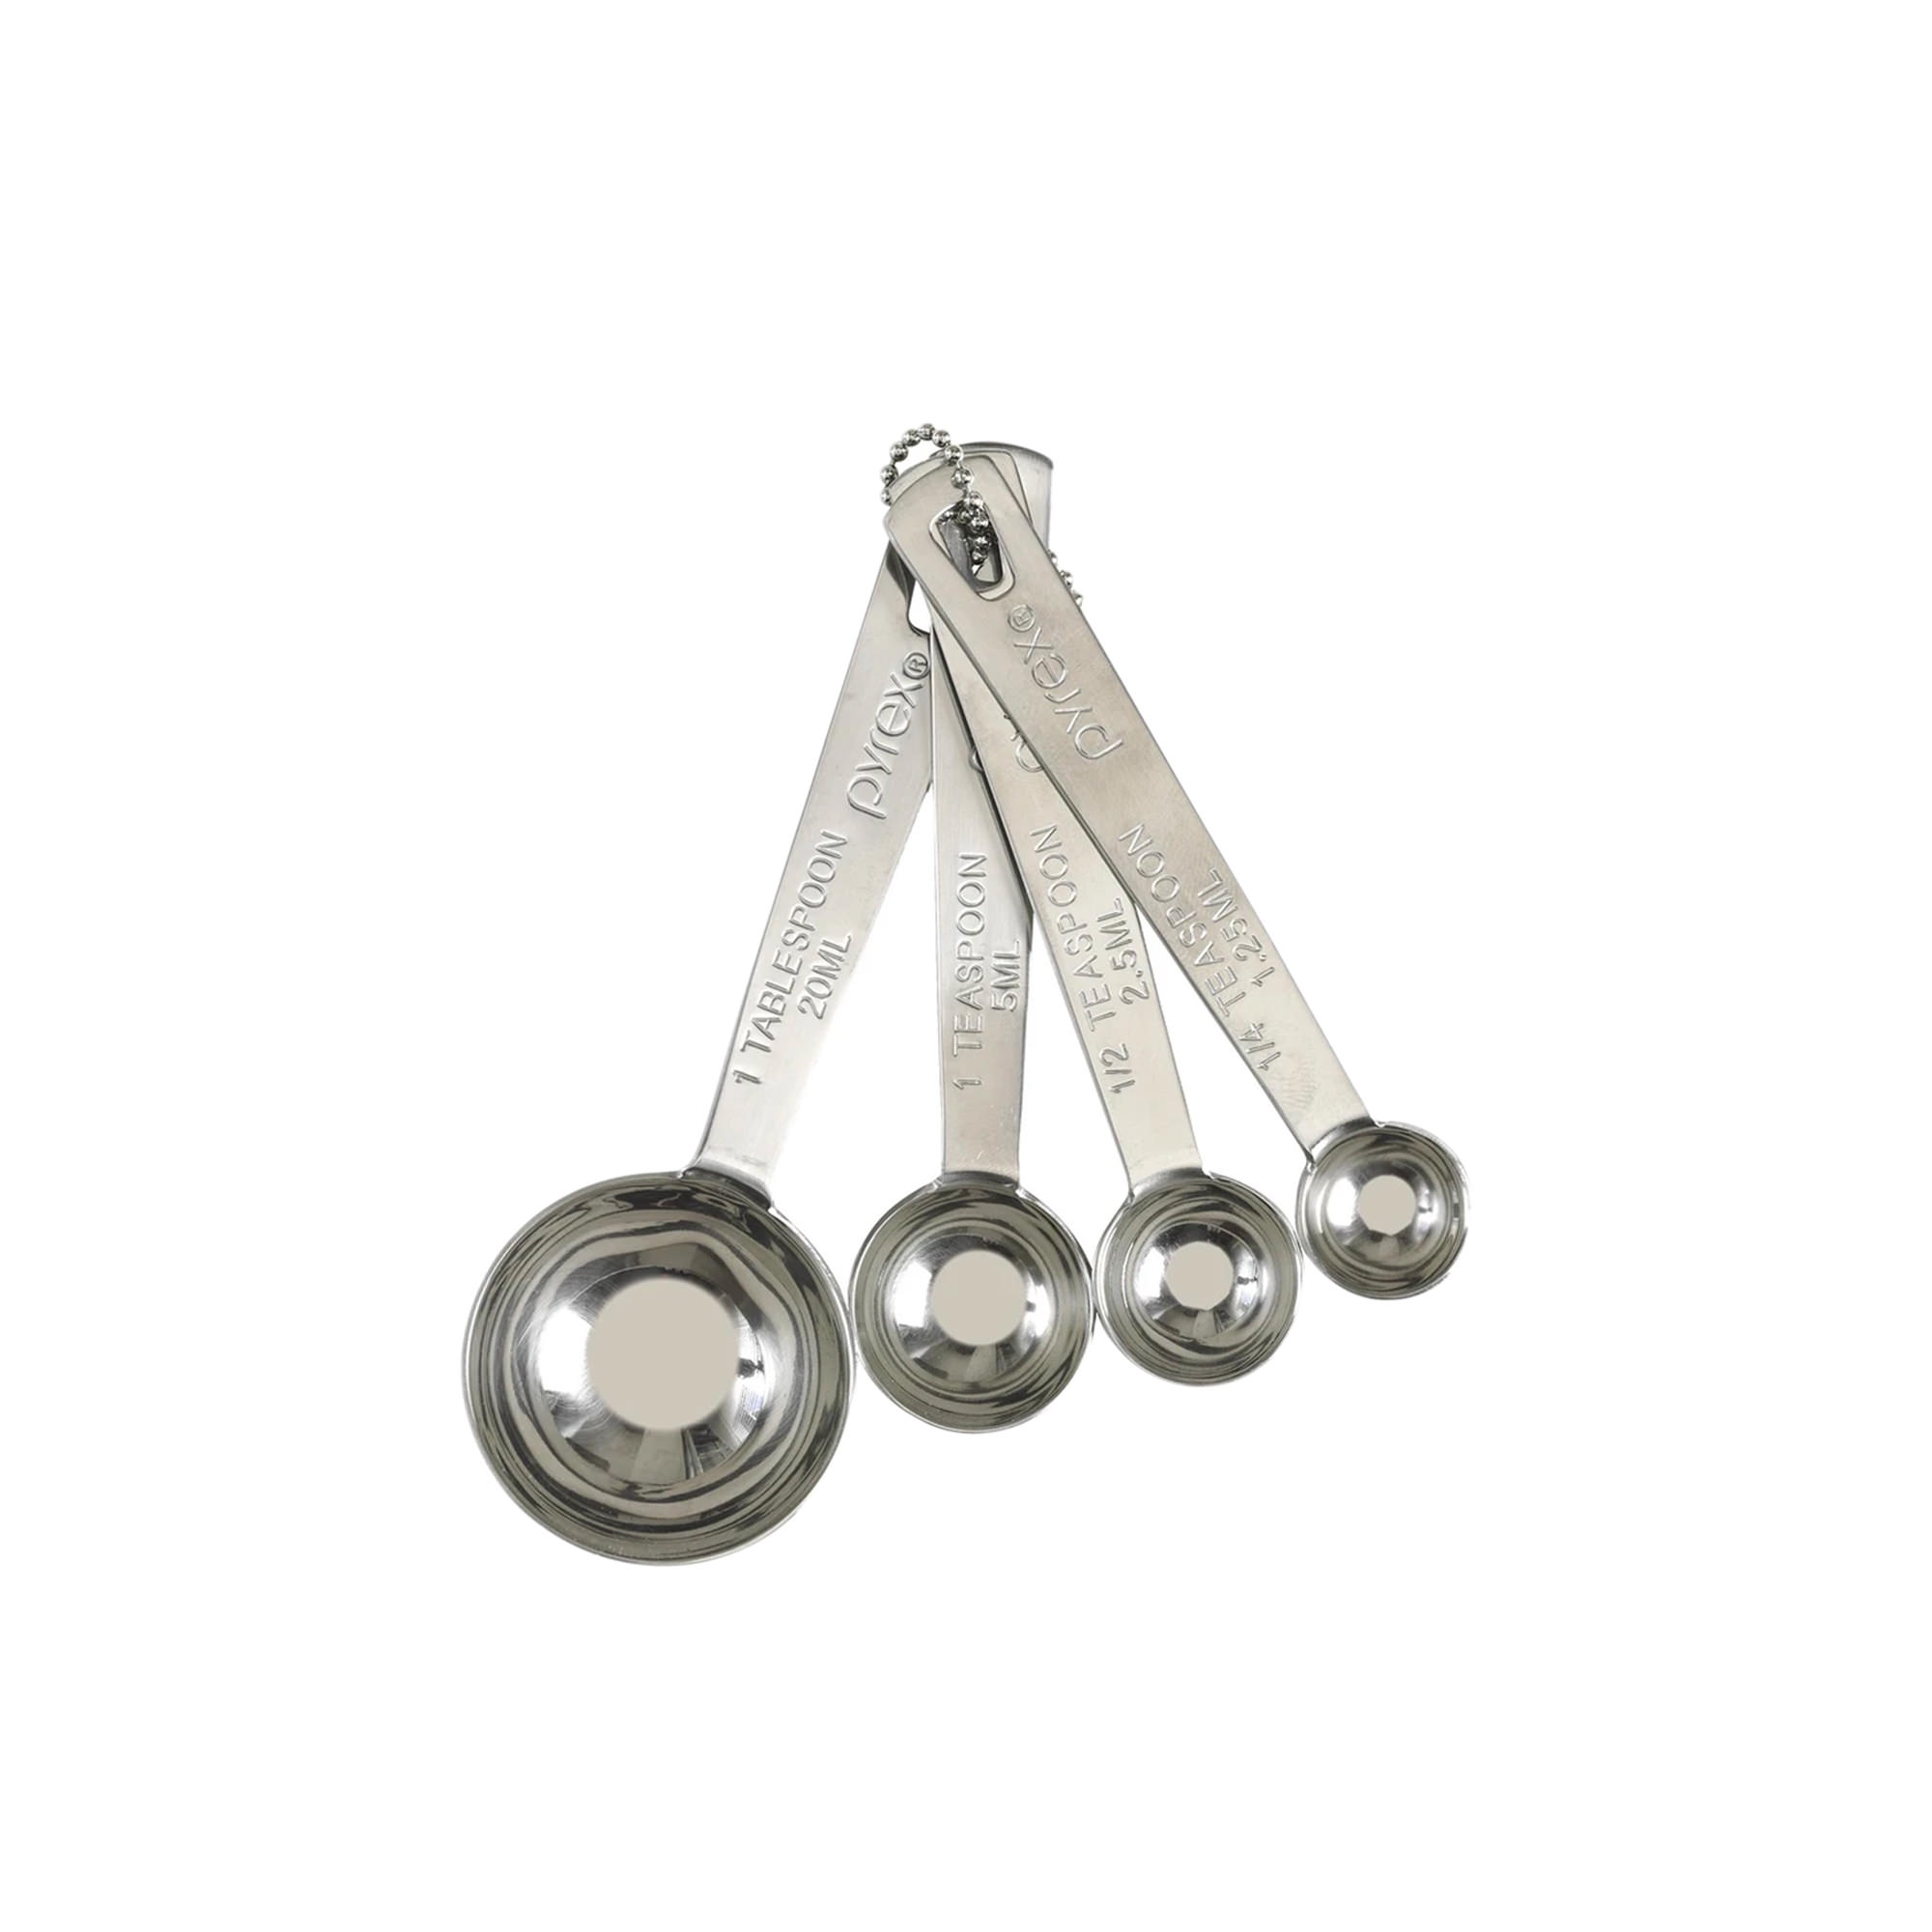 Pyrex Platinum Stainless Steel Measuring Spoon Set 4pc Image 1